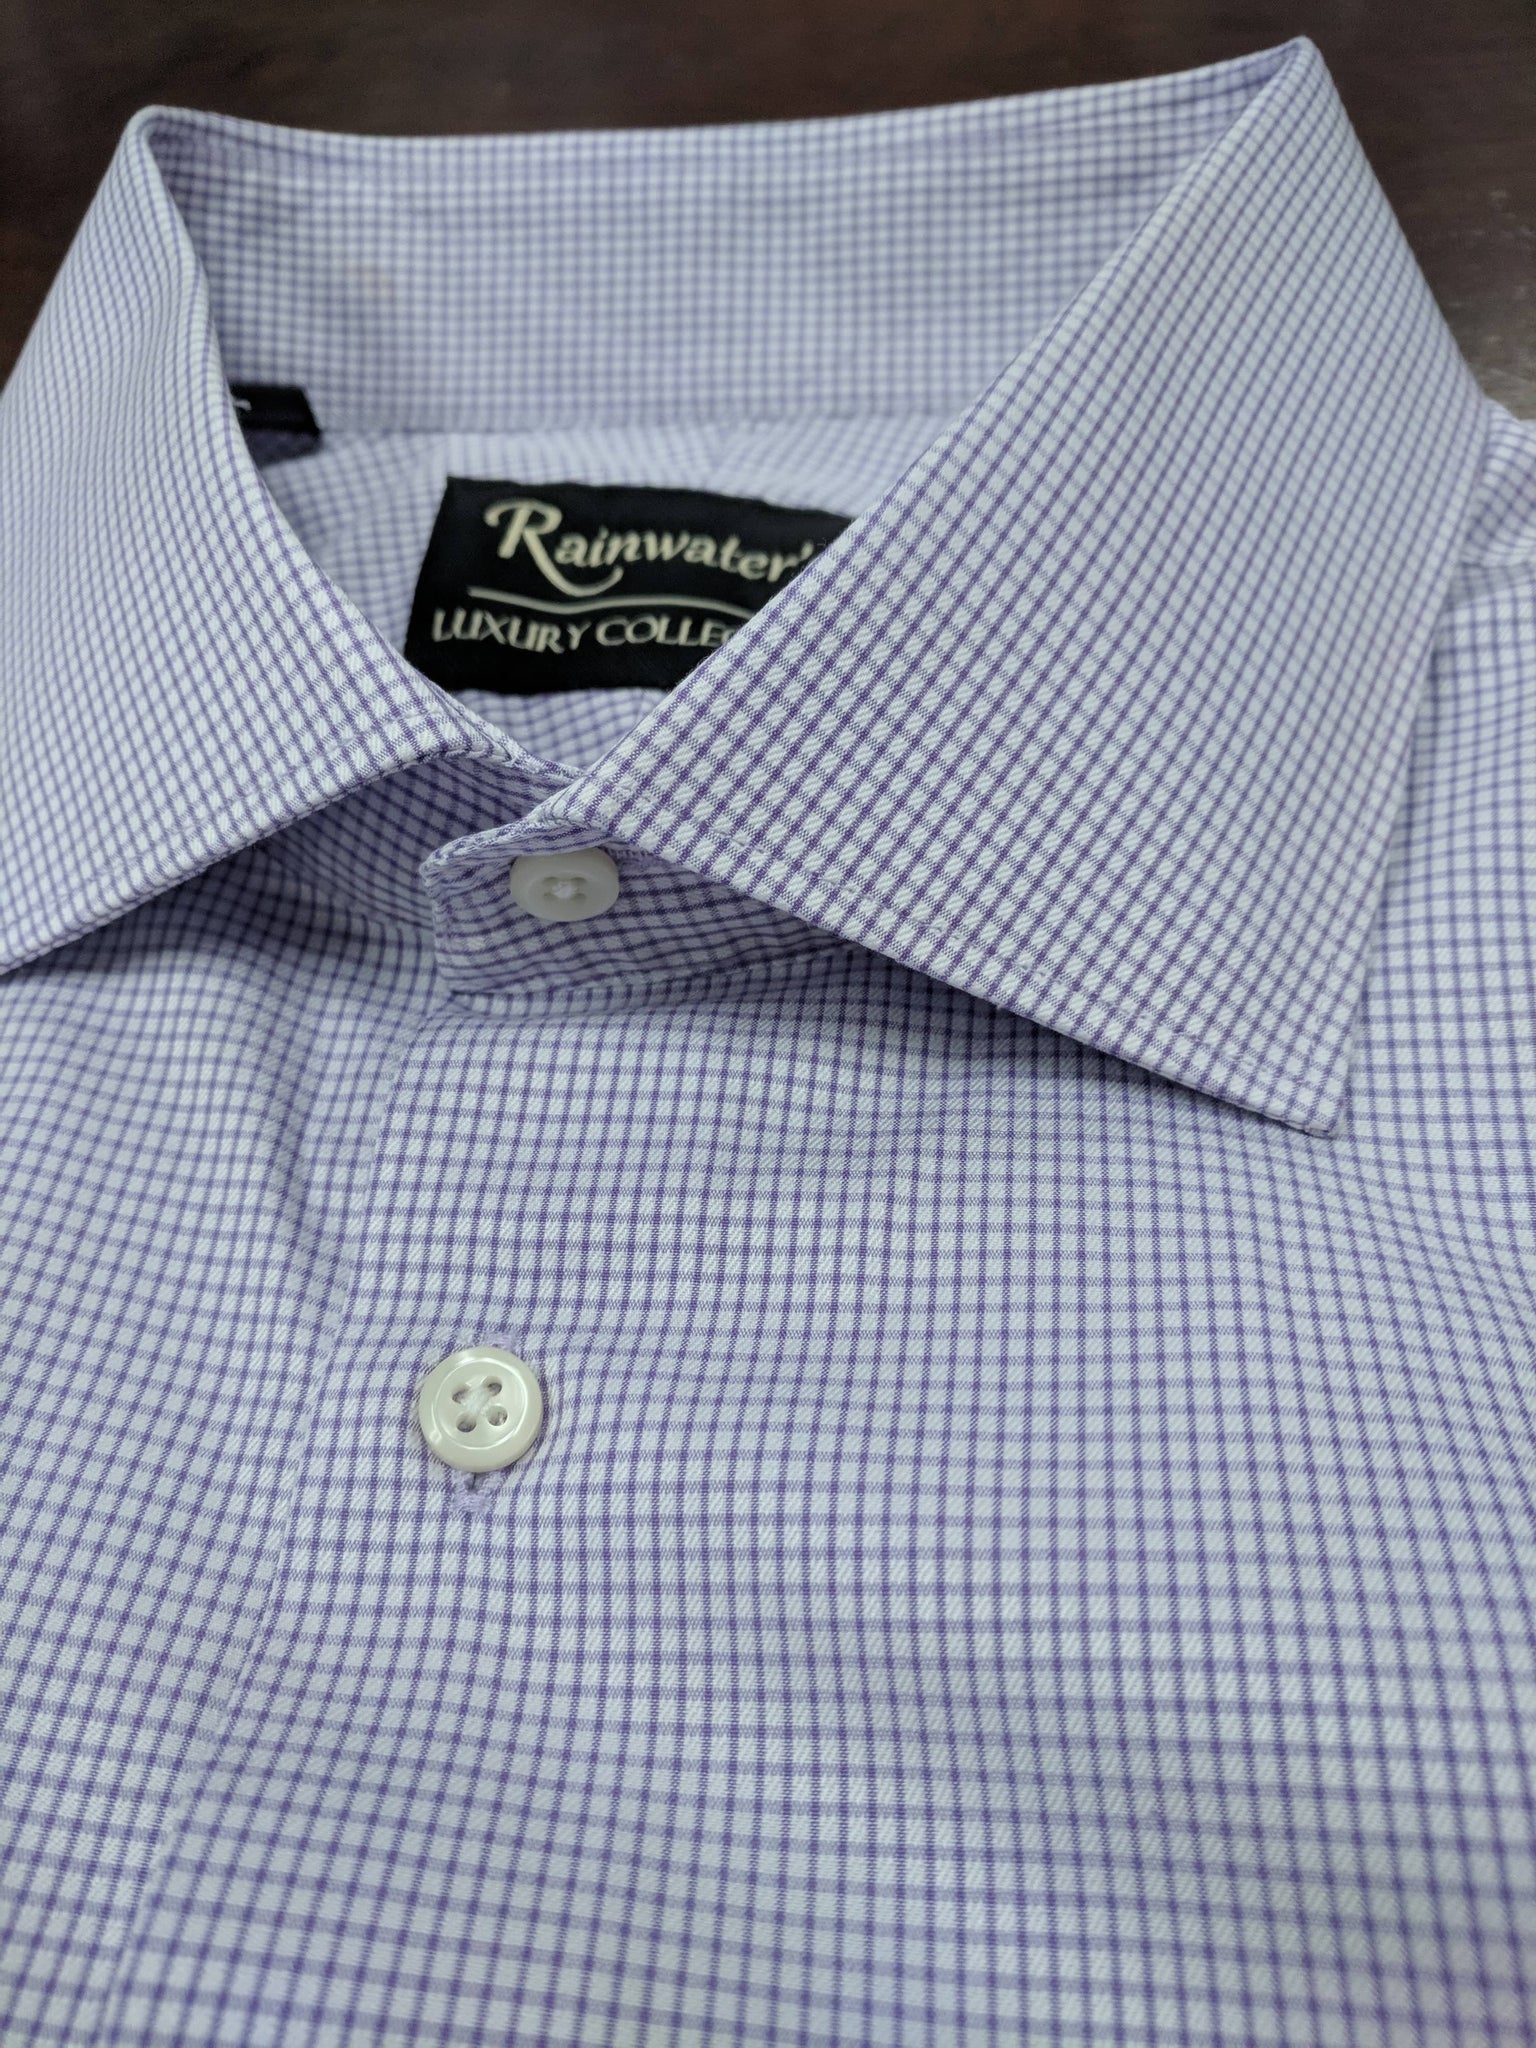 Rainwater's Luxury Collection Purple Check Dress Shirt - Rainwater's Men's Clothing and Tuxedo Rental